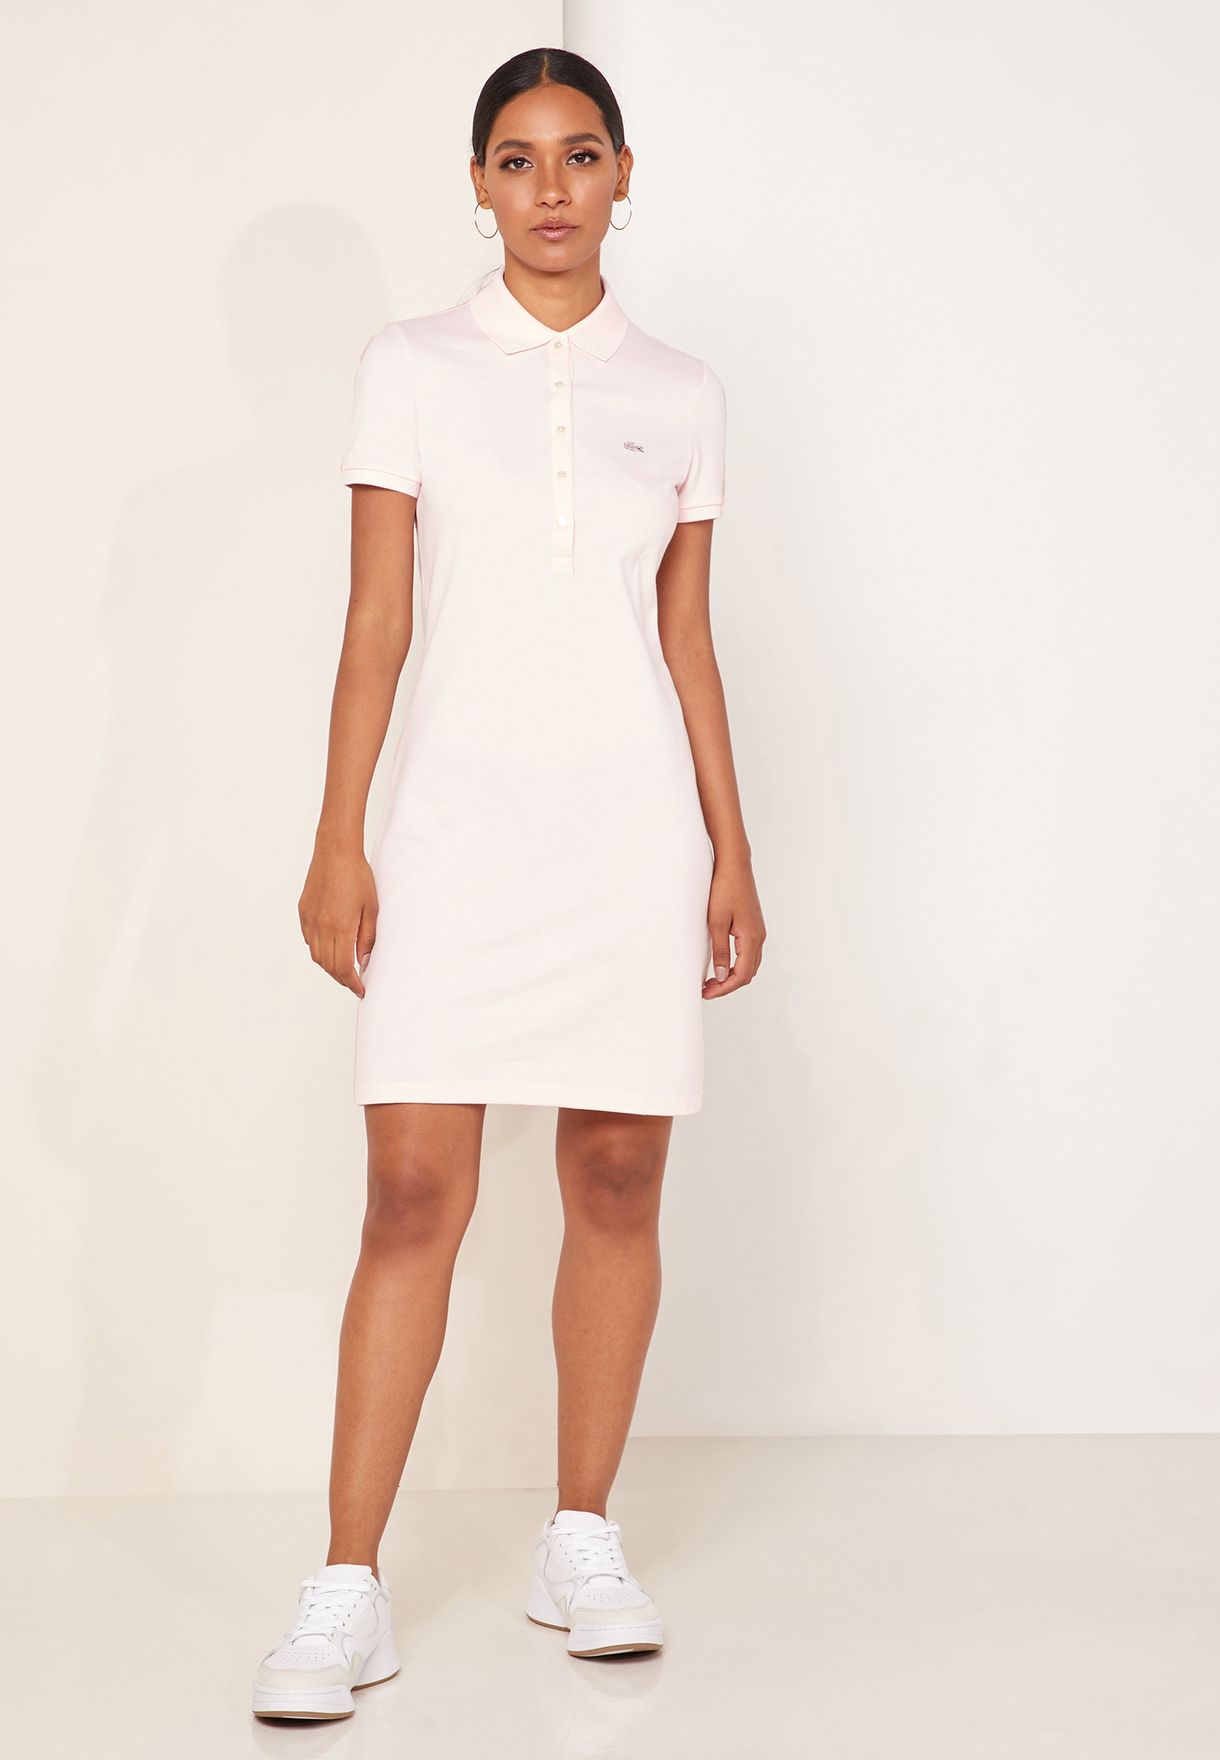 Lacoste Polo Dress White | fgqualitykft.hu